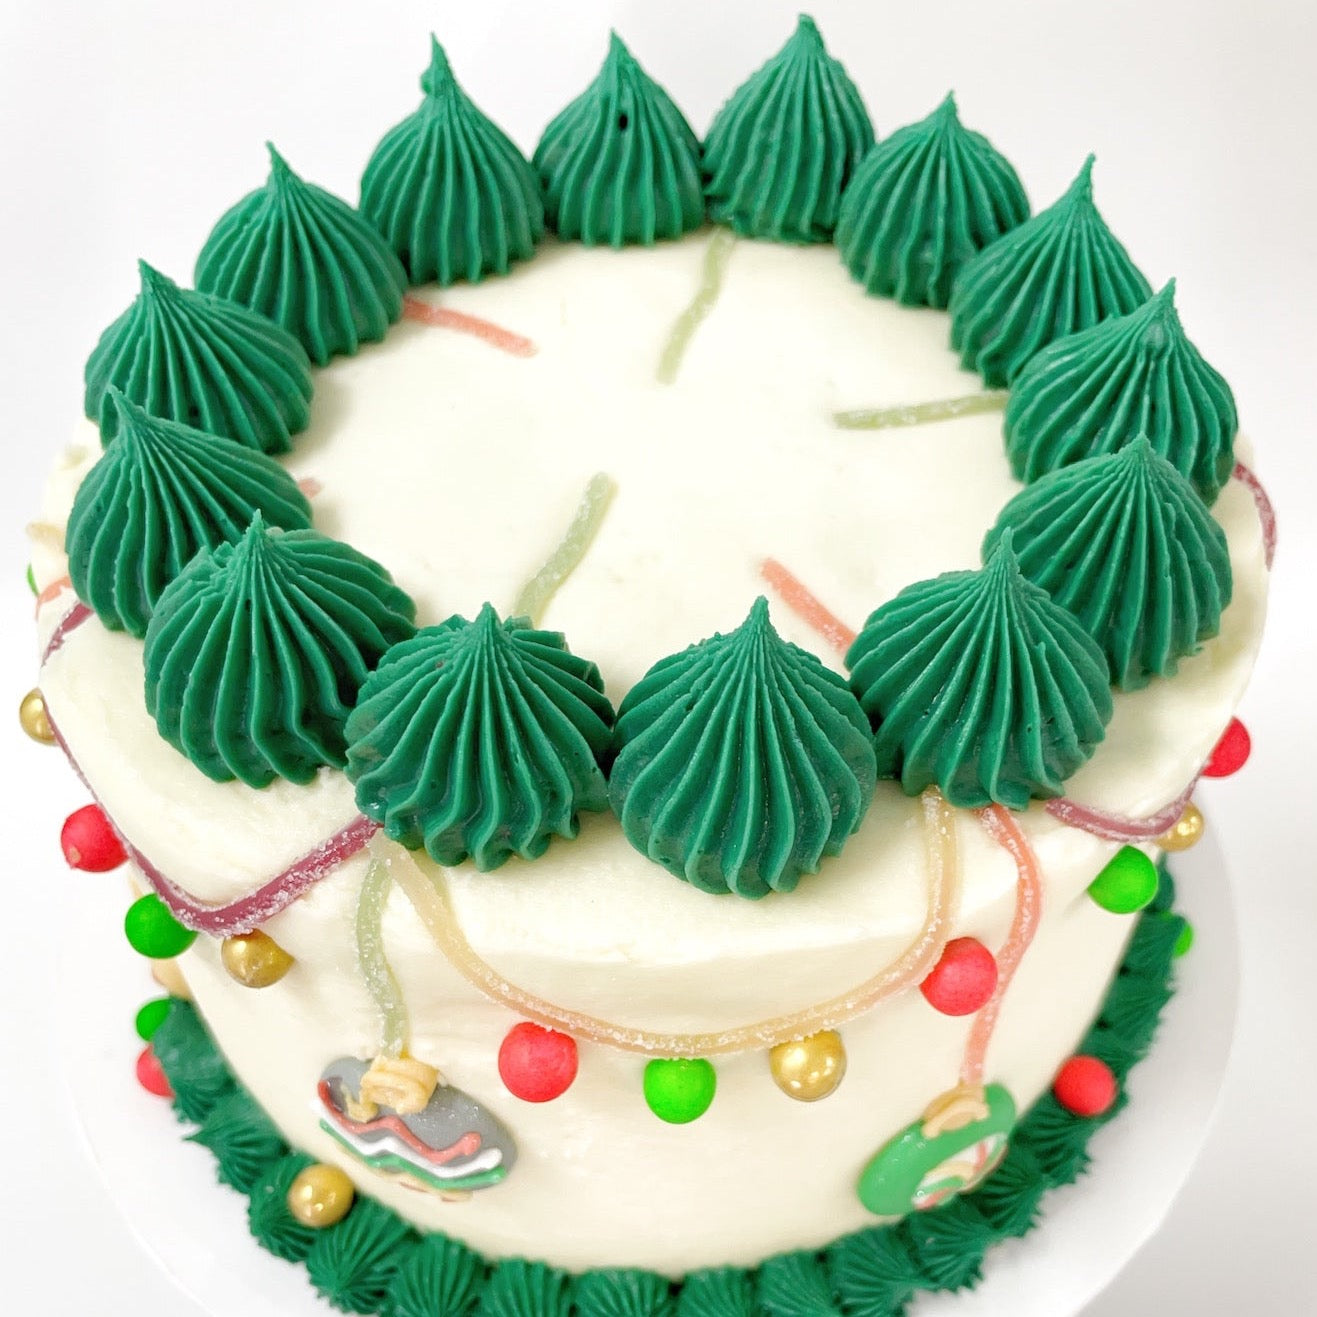 Christmas Ball Balls DIY Cake Kit, Xmas Cake Kit, Xmas Tree Cake Kit, Festive Cake, Ball Balls, Christmas Decorations